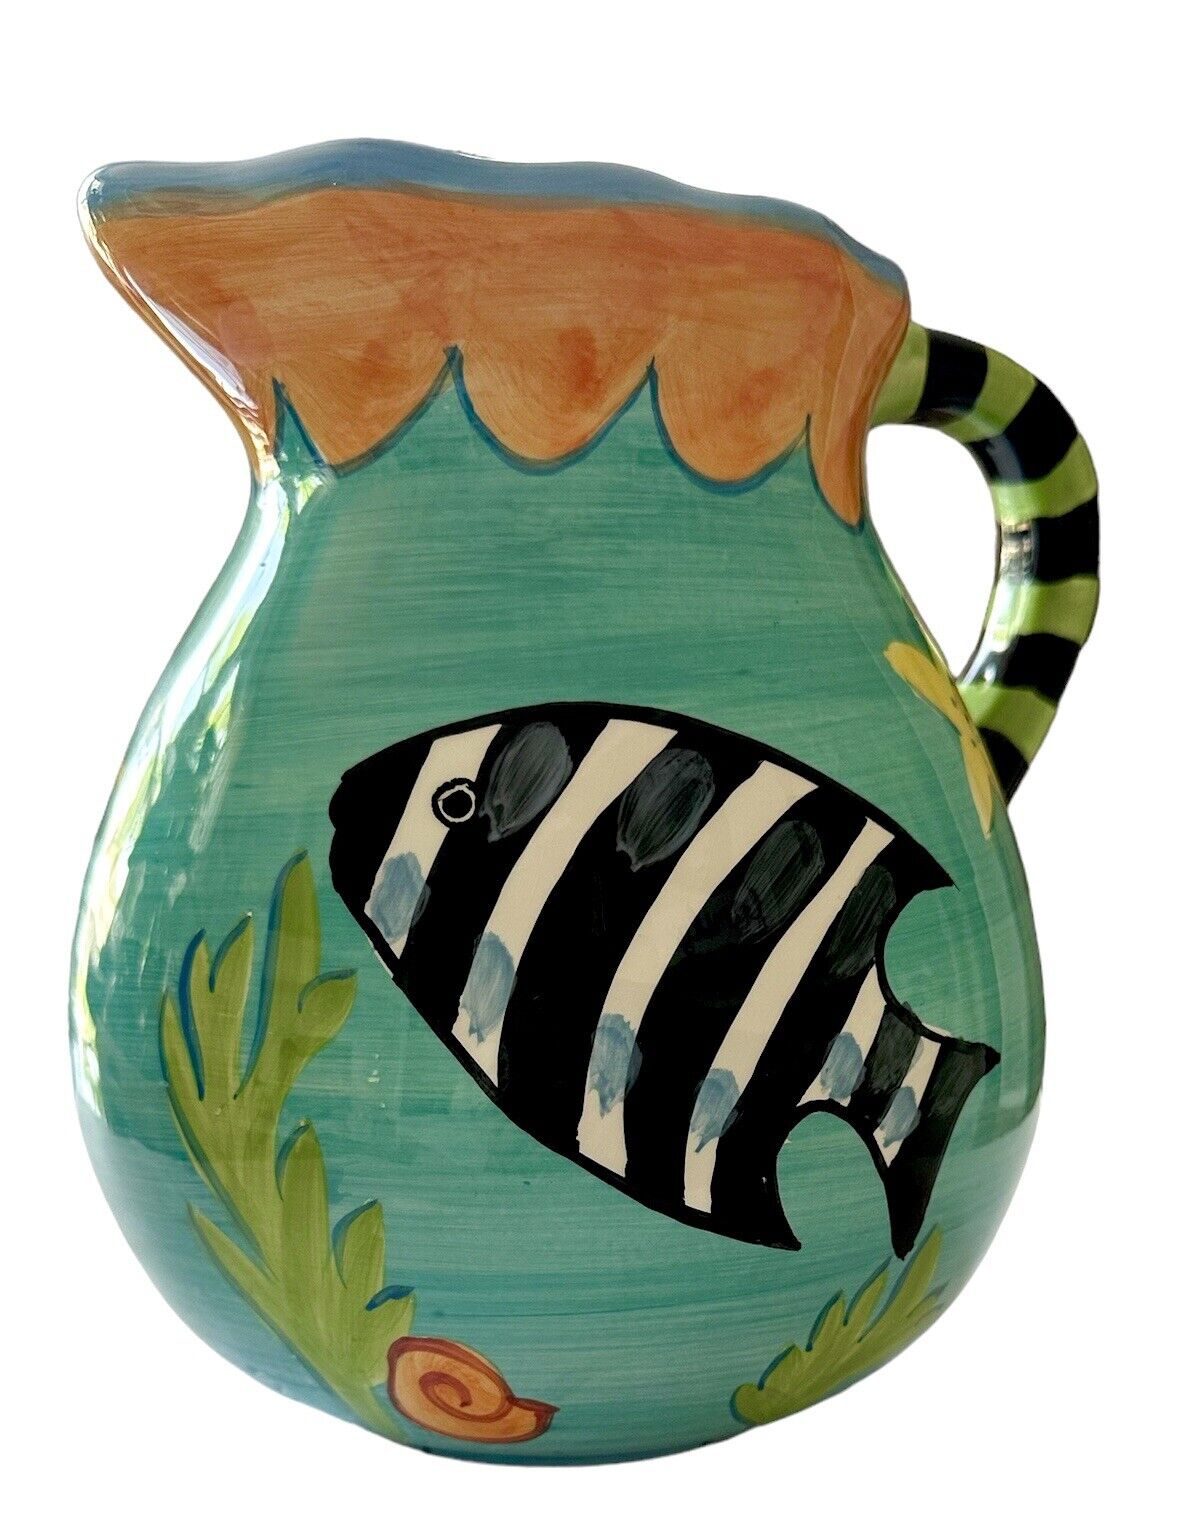 Hausenware Ceramic handpainted Pitcher Colorful Tropical Ocean Beach Scene